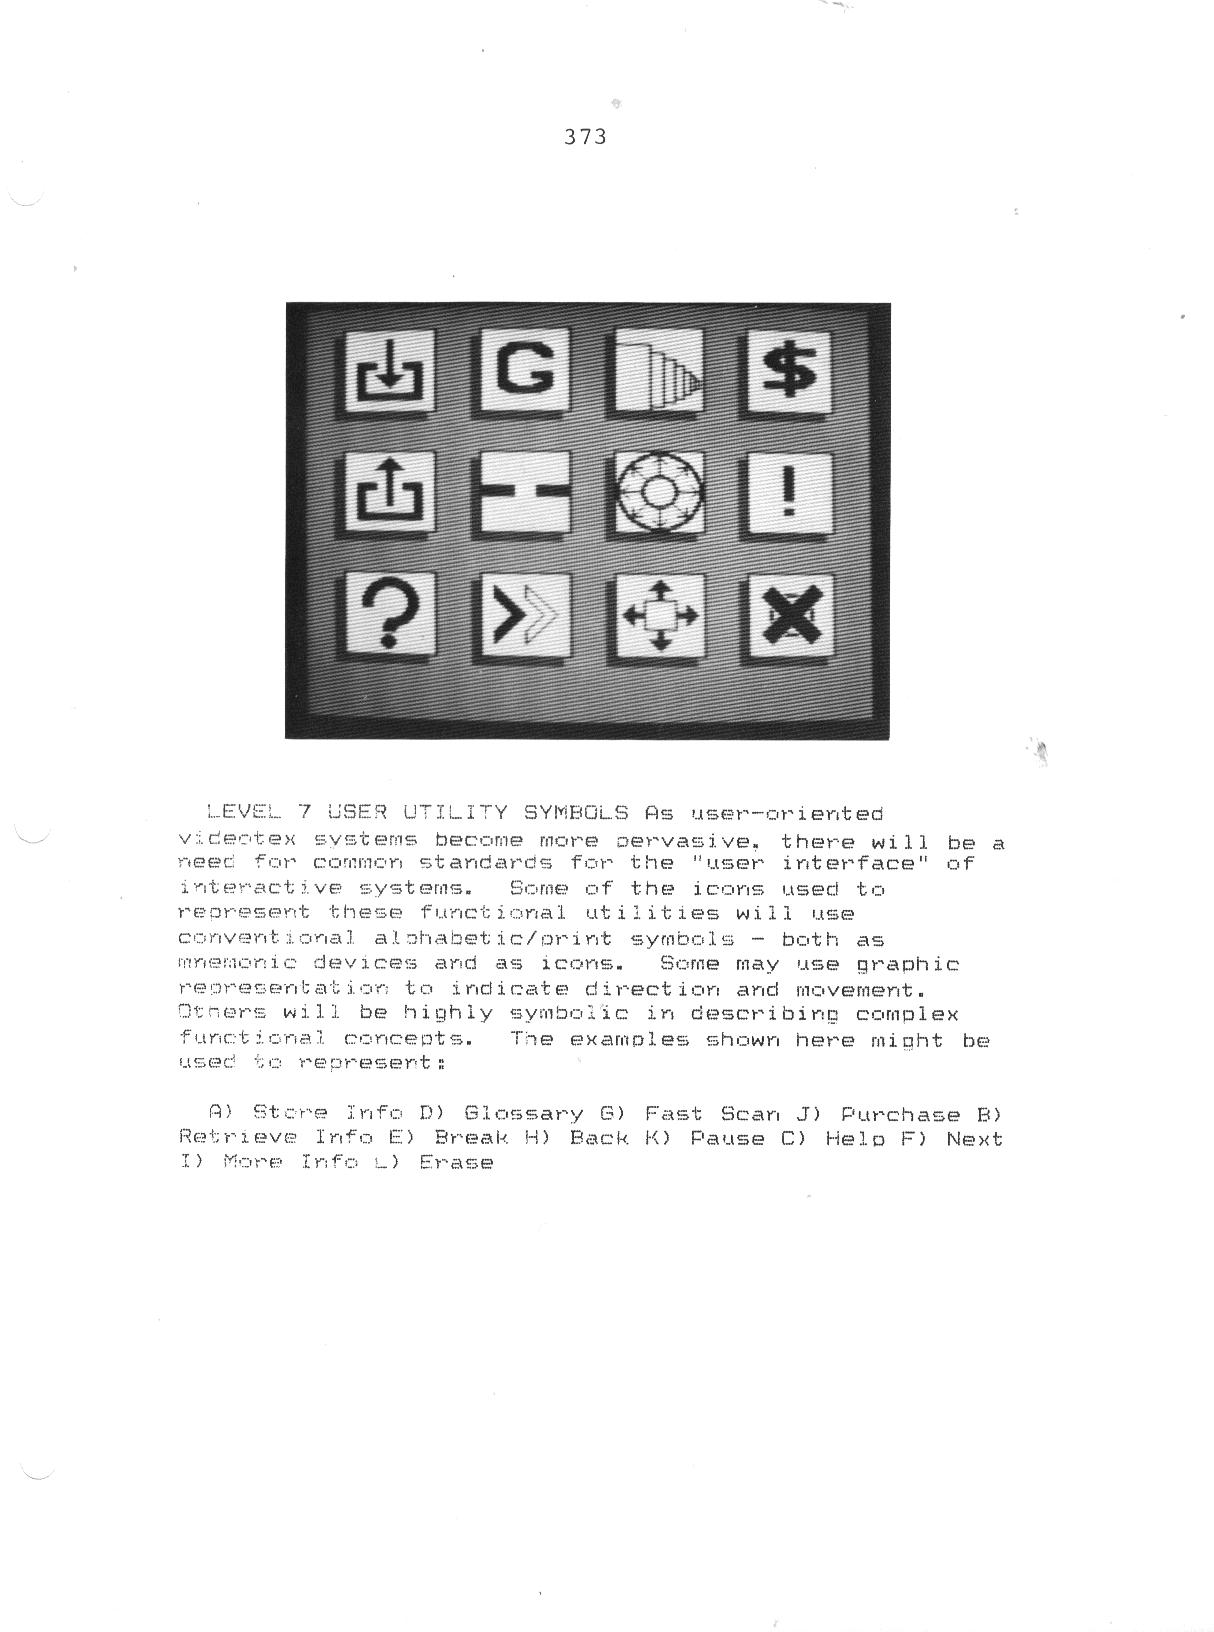 Graphics:  Early Digital Interaction Symbols